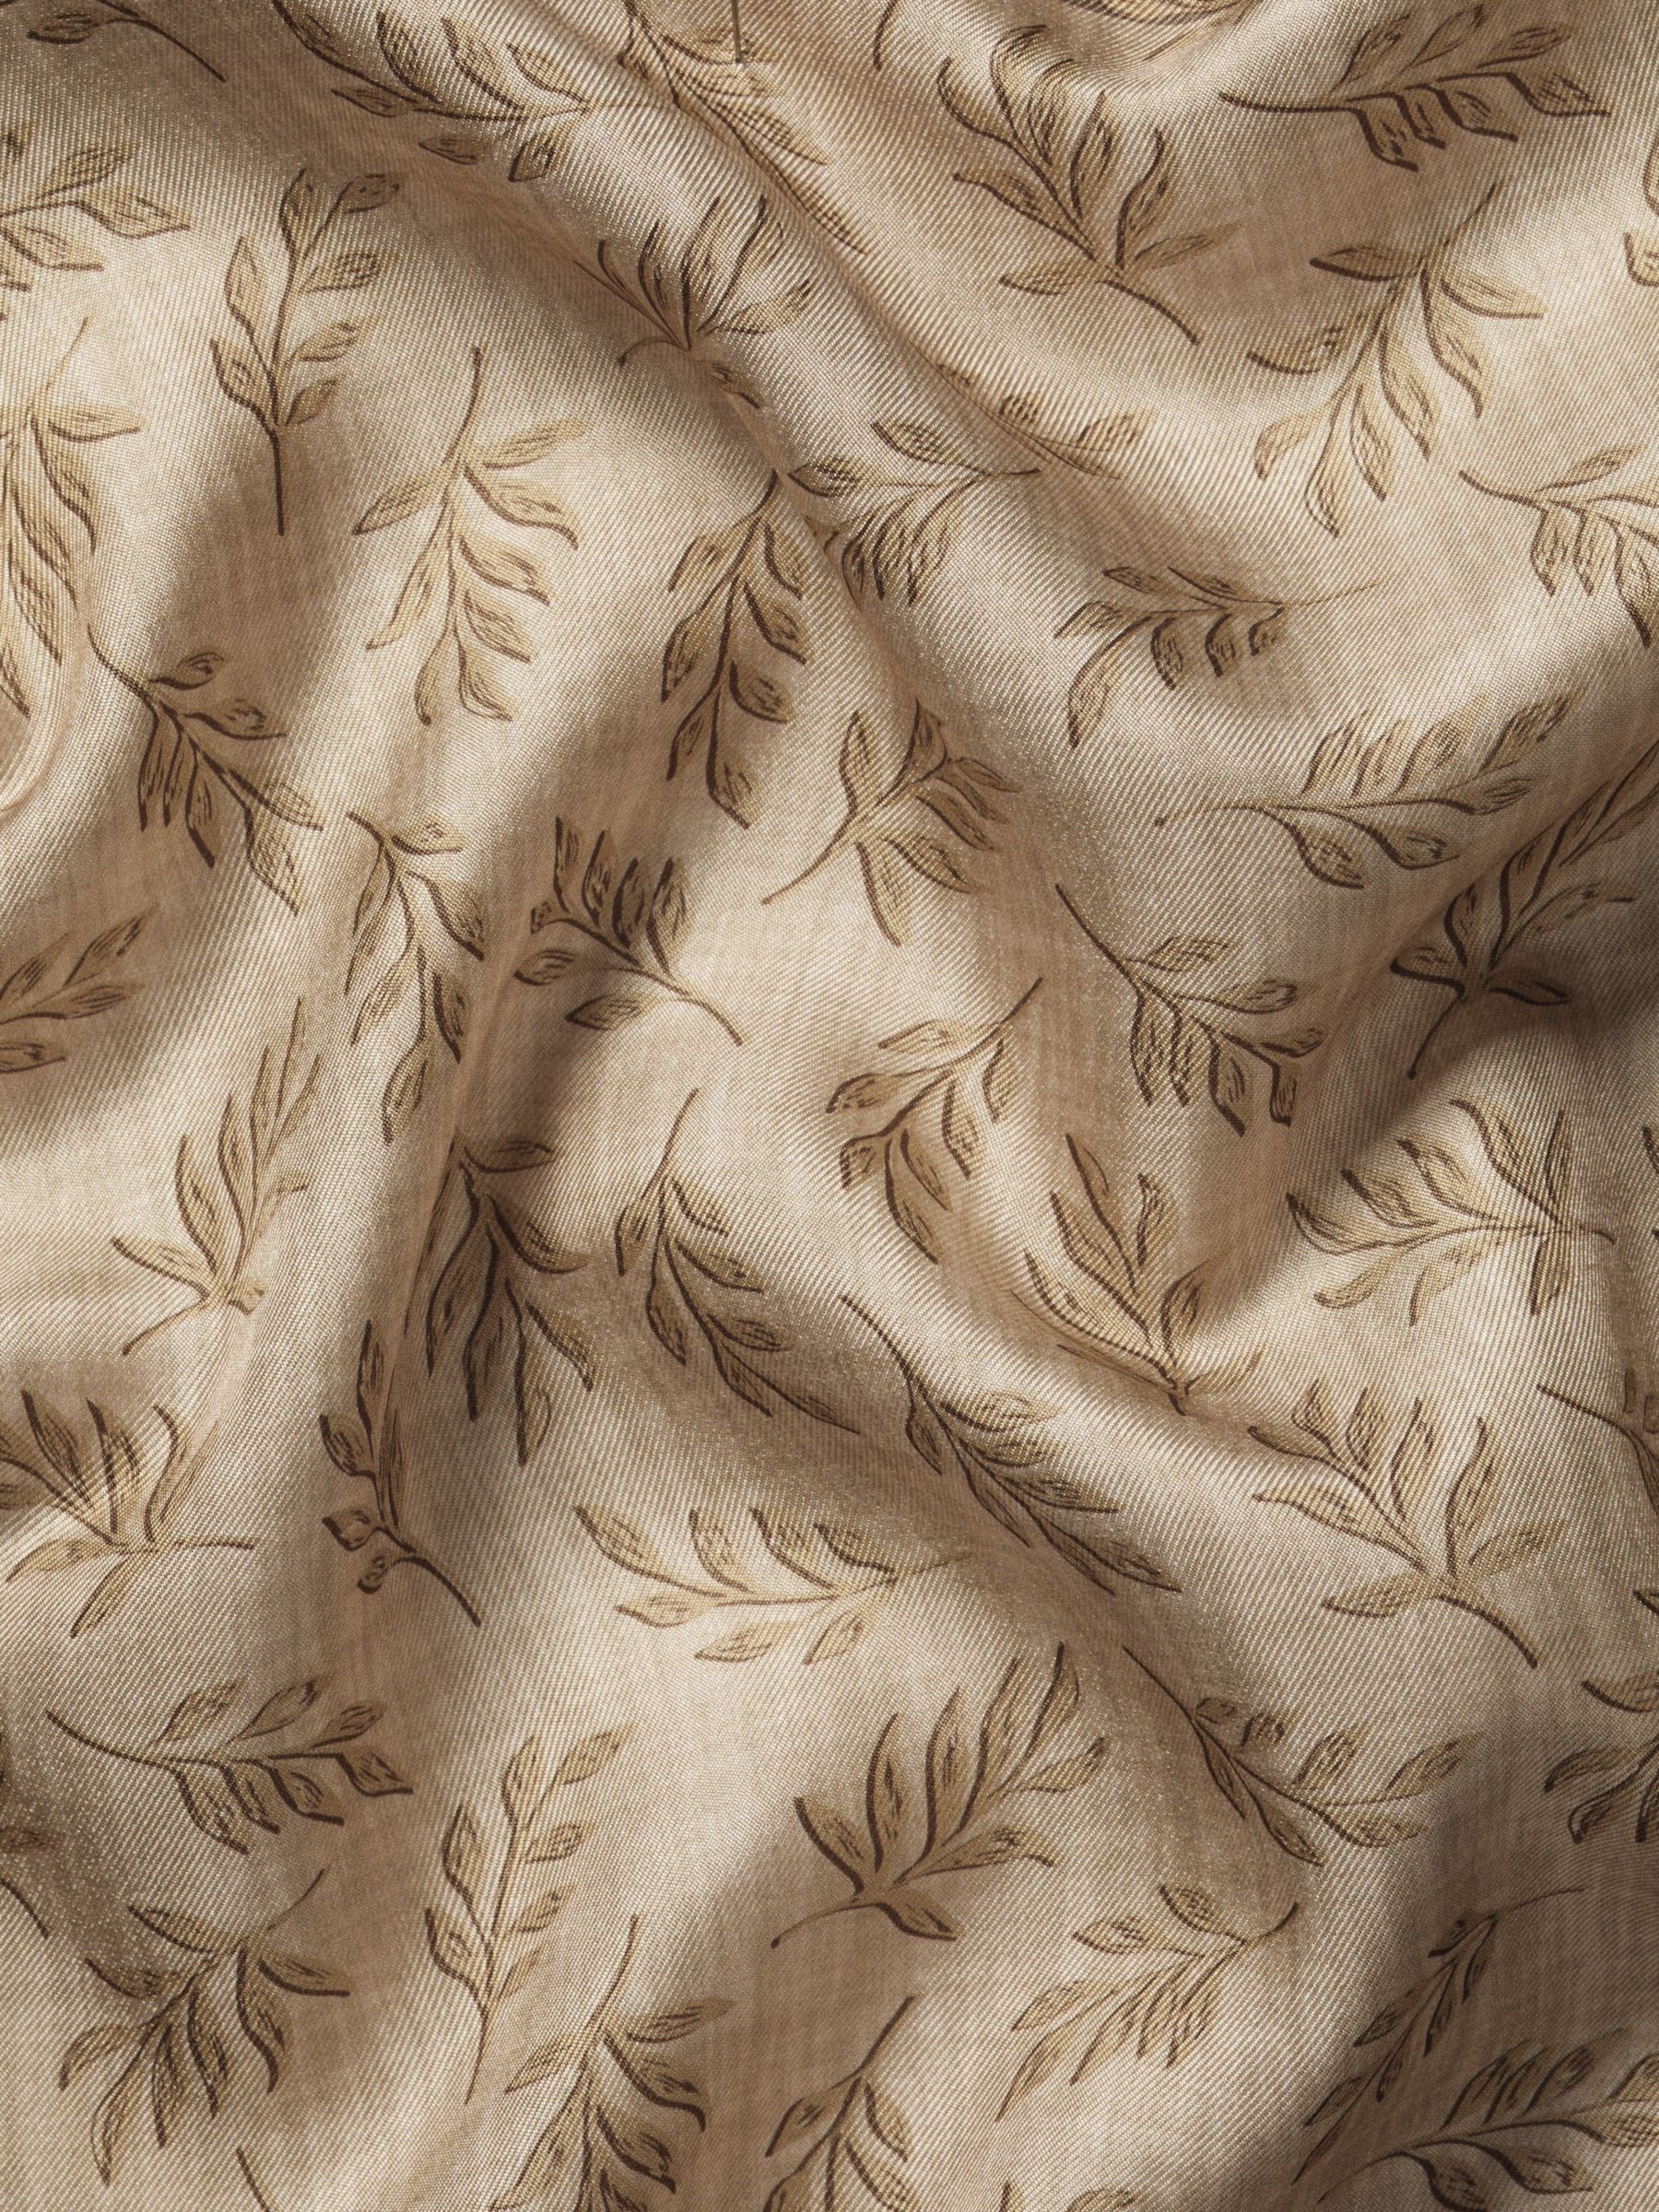 Buy Charles Tyrwhitt Silk Pocket Square Floral Handkerchief, Taupe Online at johnlewis.com